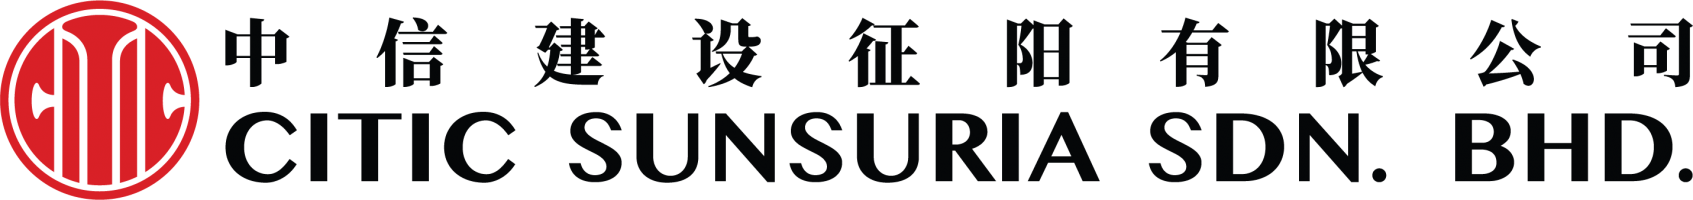 Citic Sunsuria Sdn Bhd logo